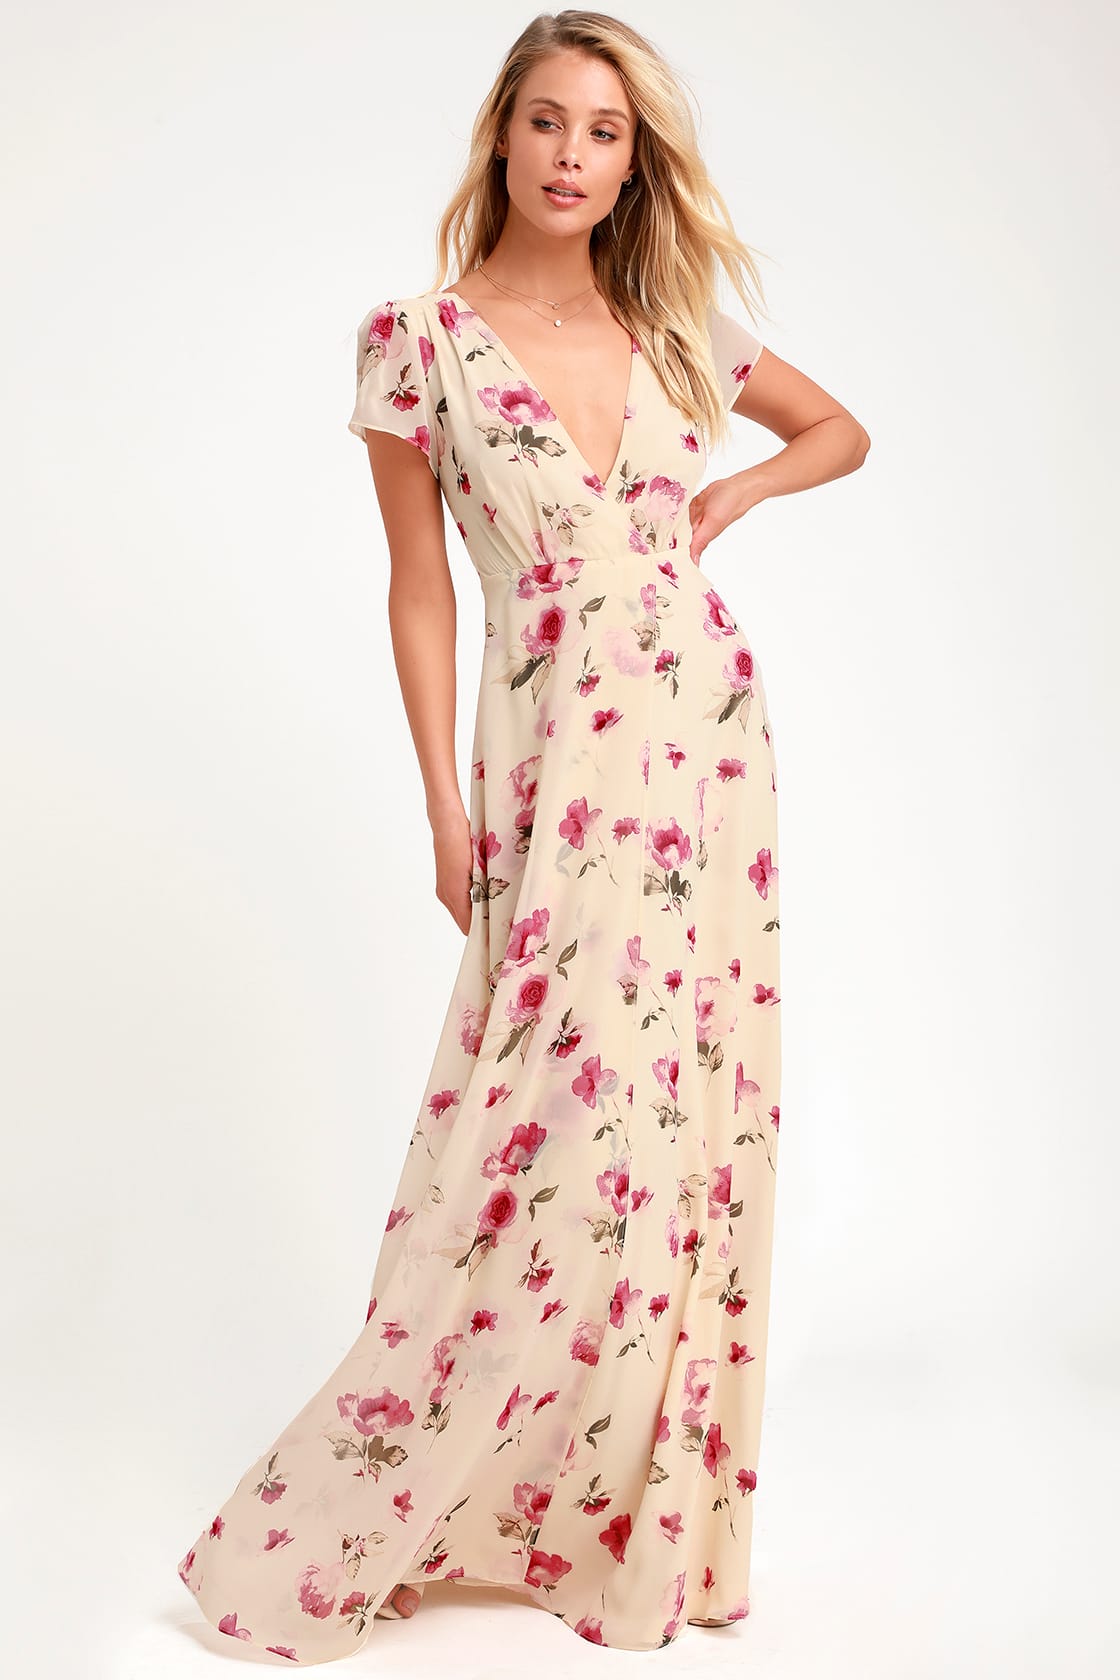 Lovely Cream Floral Print Dress - Maxi Dress - Short Sleeve Dress - Lulus